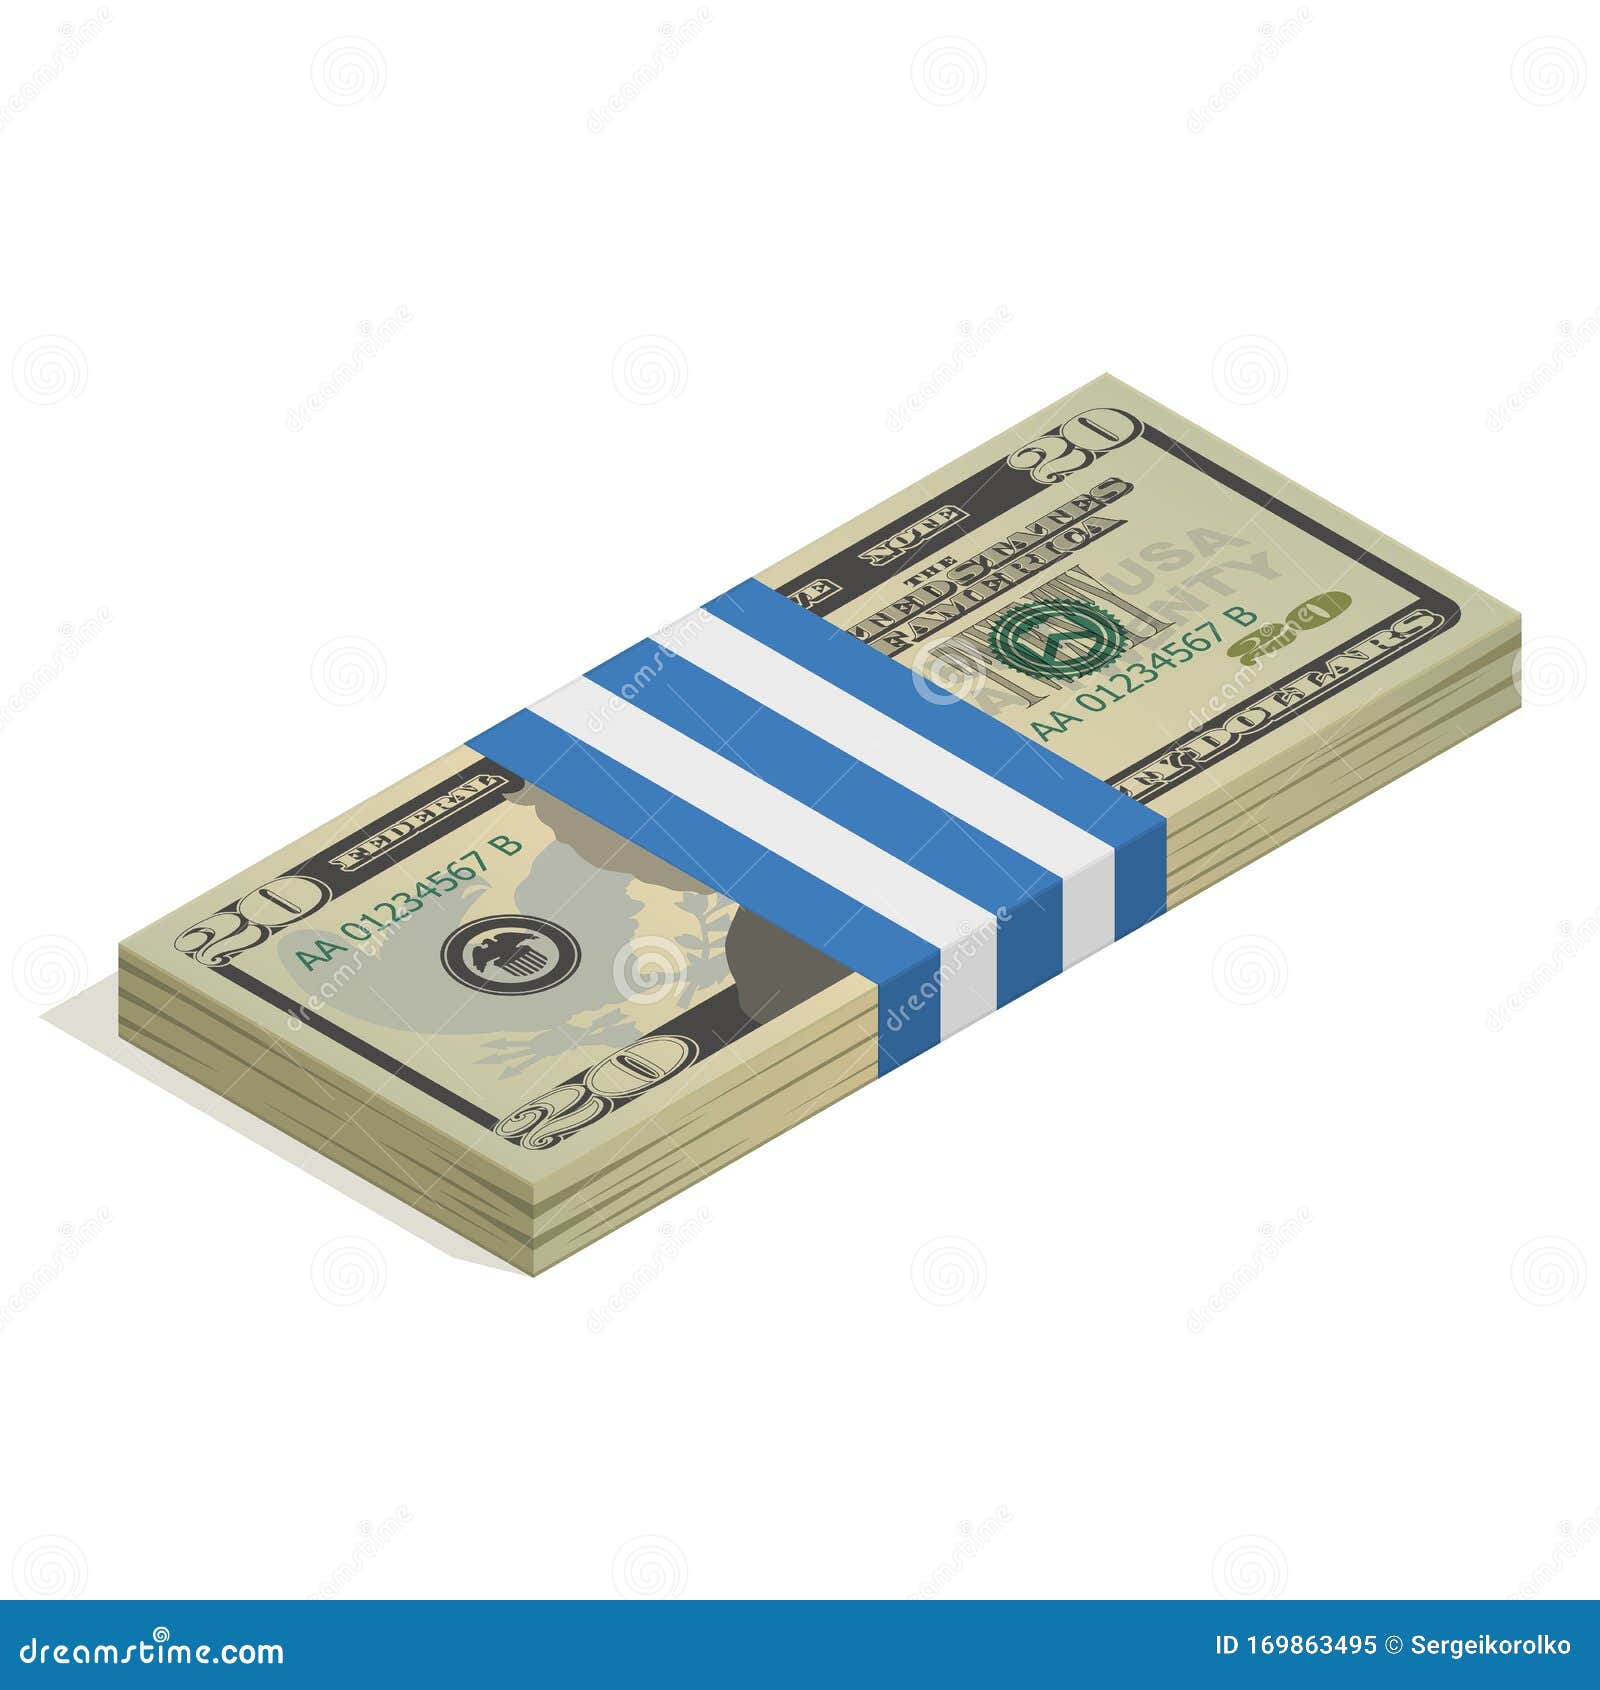 List 100+ Images how many twenty dollar bills in a bank bundle Stunning